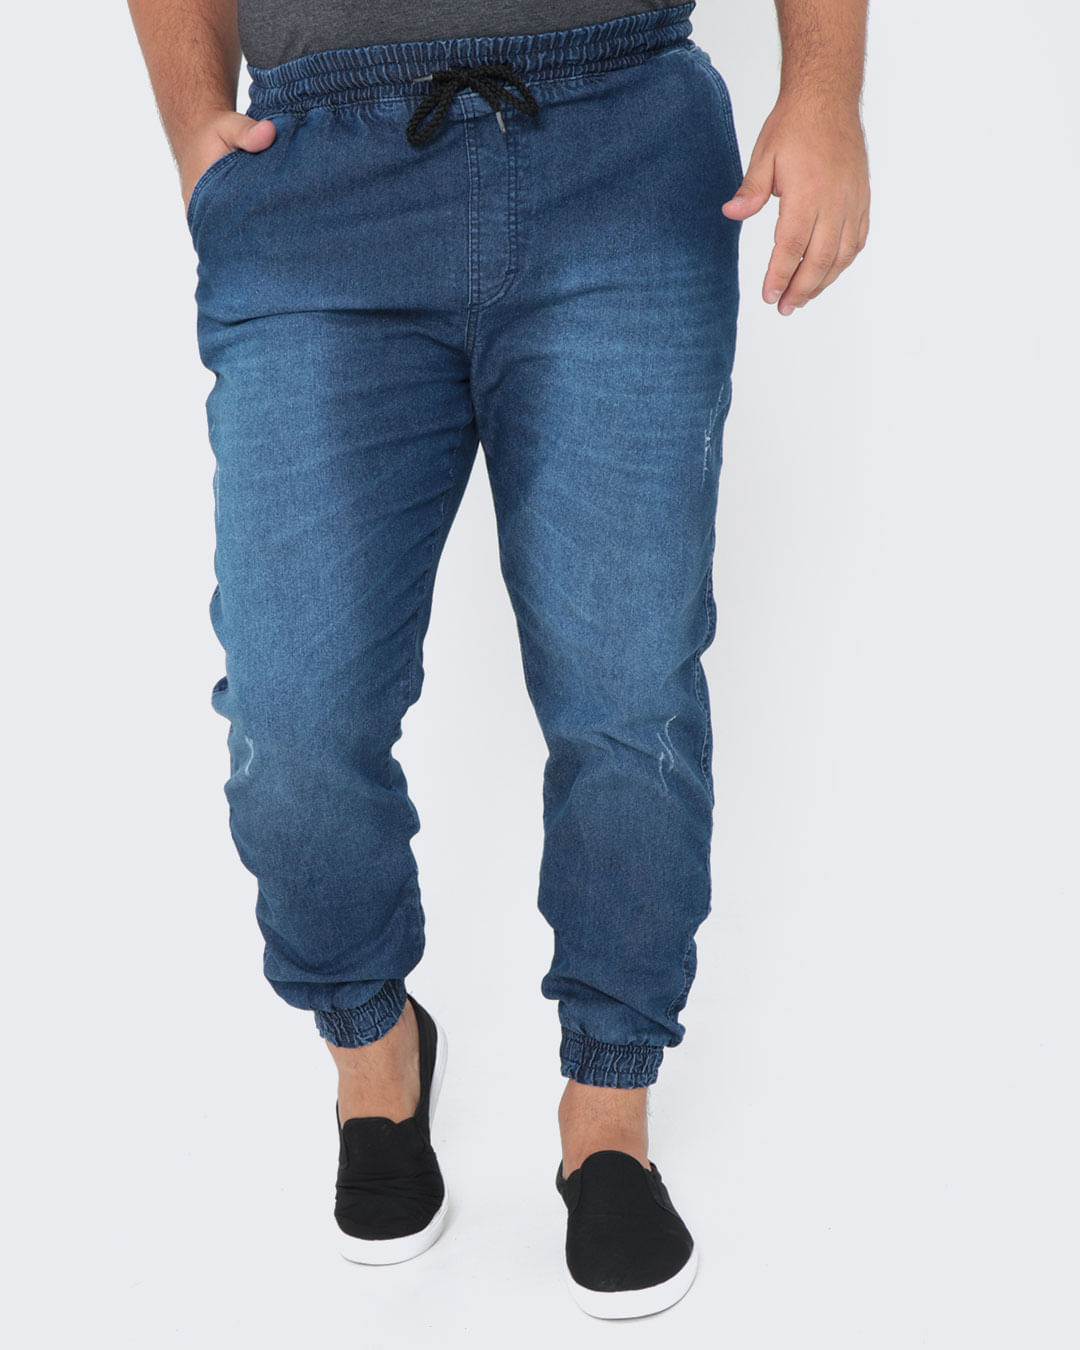 Calca-jeans-Masculina-Plus-Size-Jogger-Azul